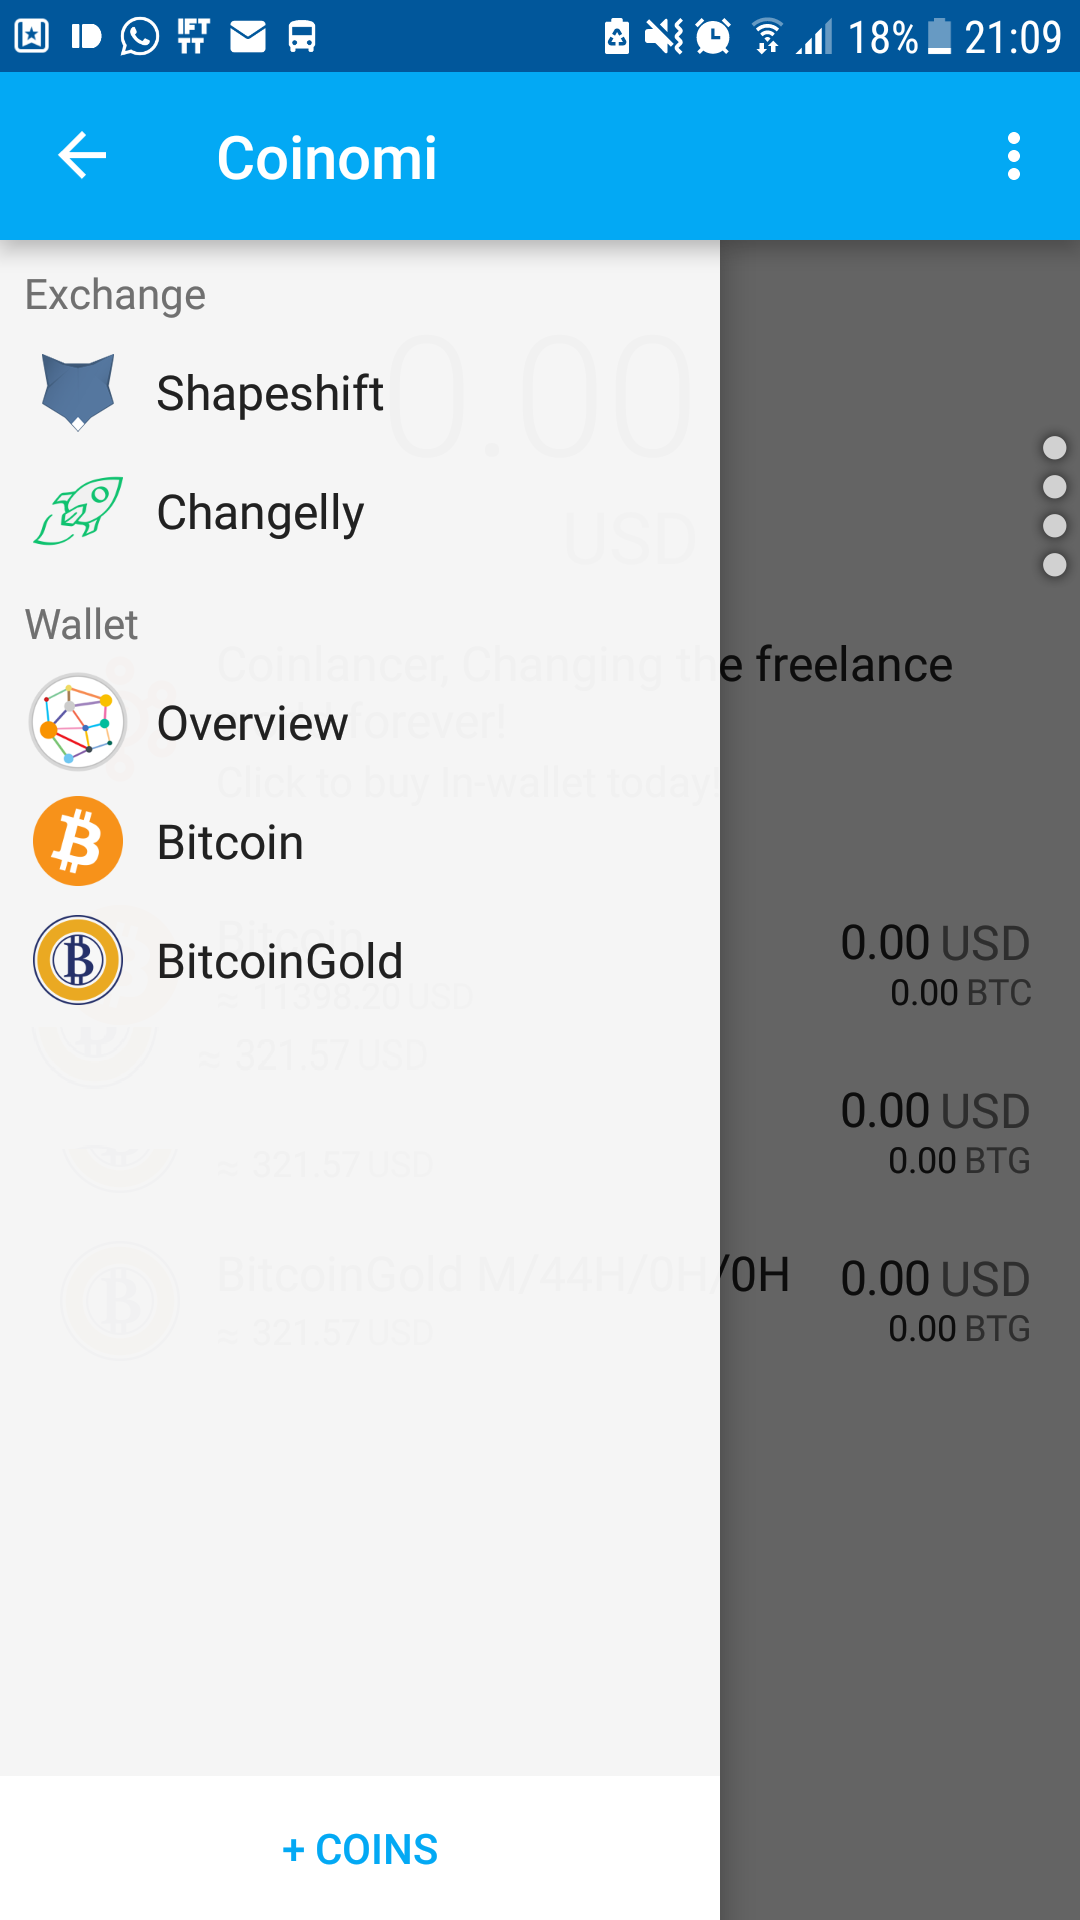 Bitcoin Gold Blockchaininfo Tokencard Coin Cold Wallet Options - 